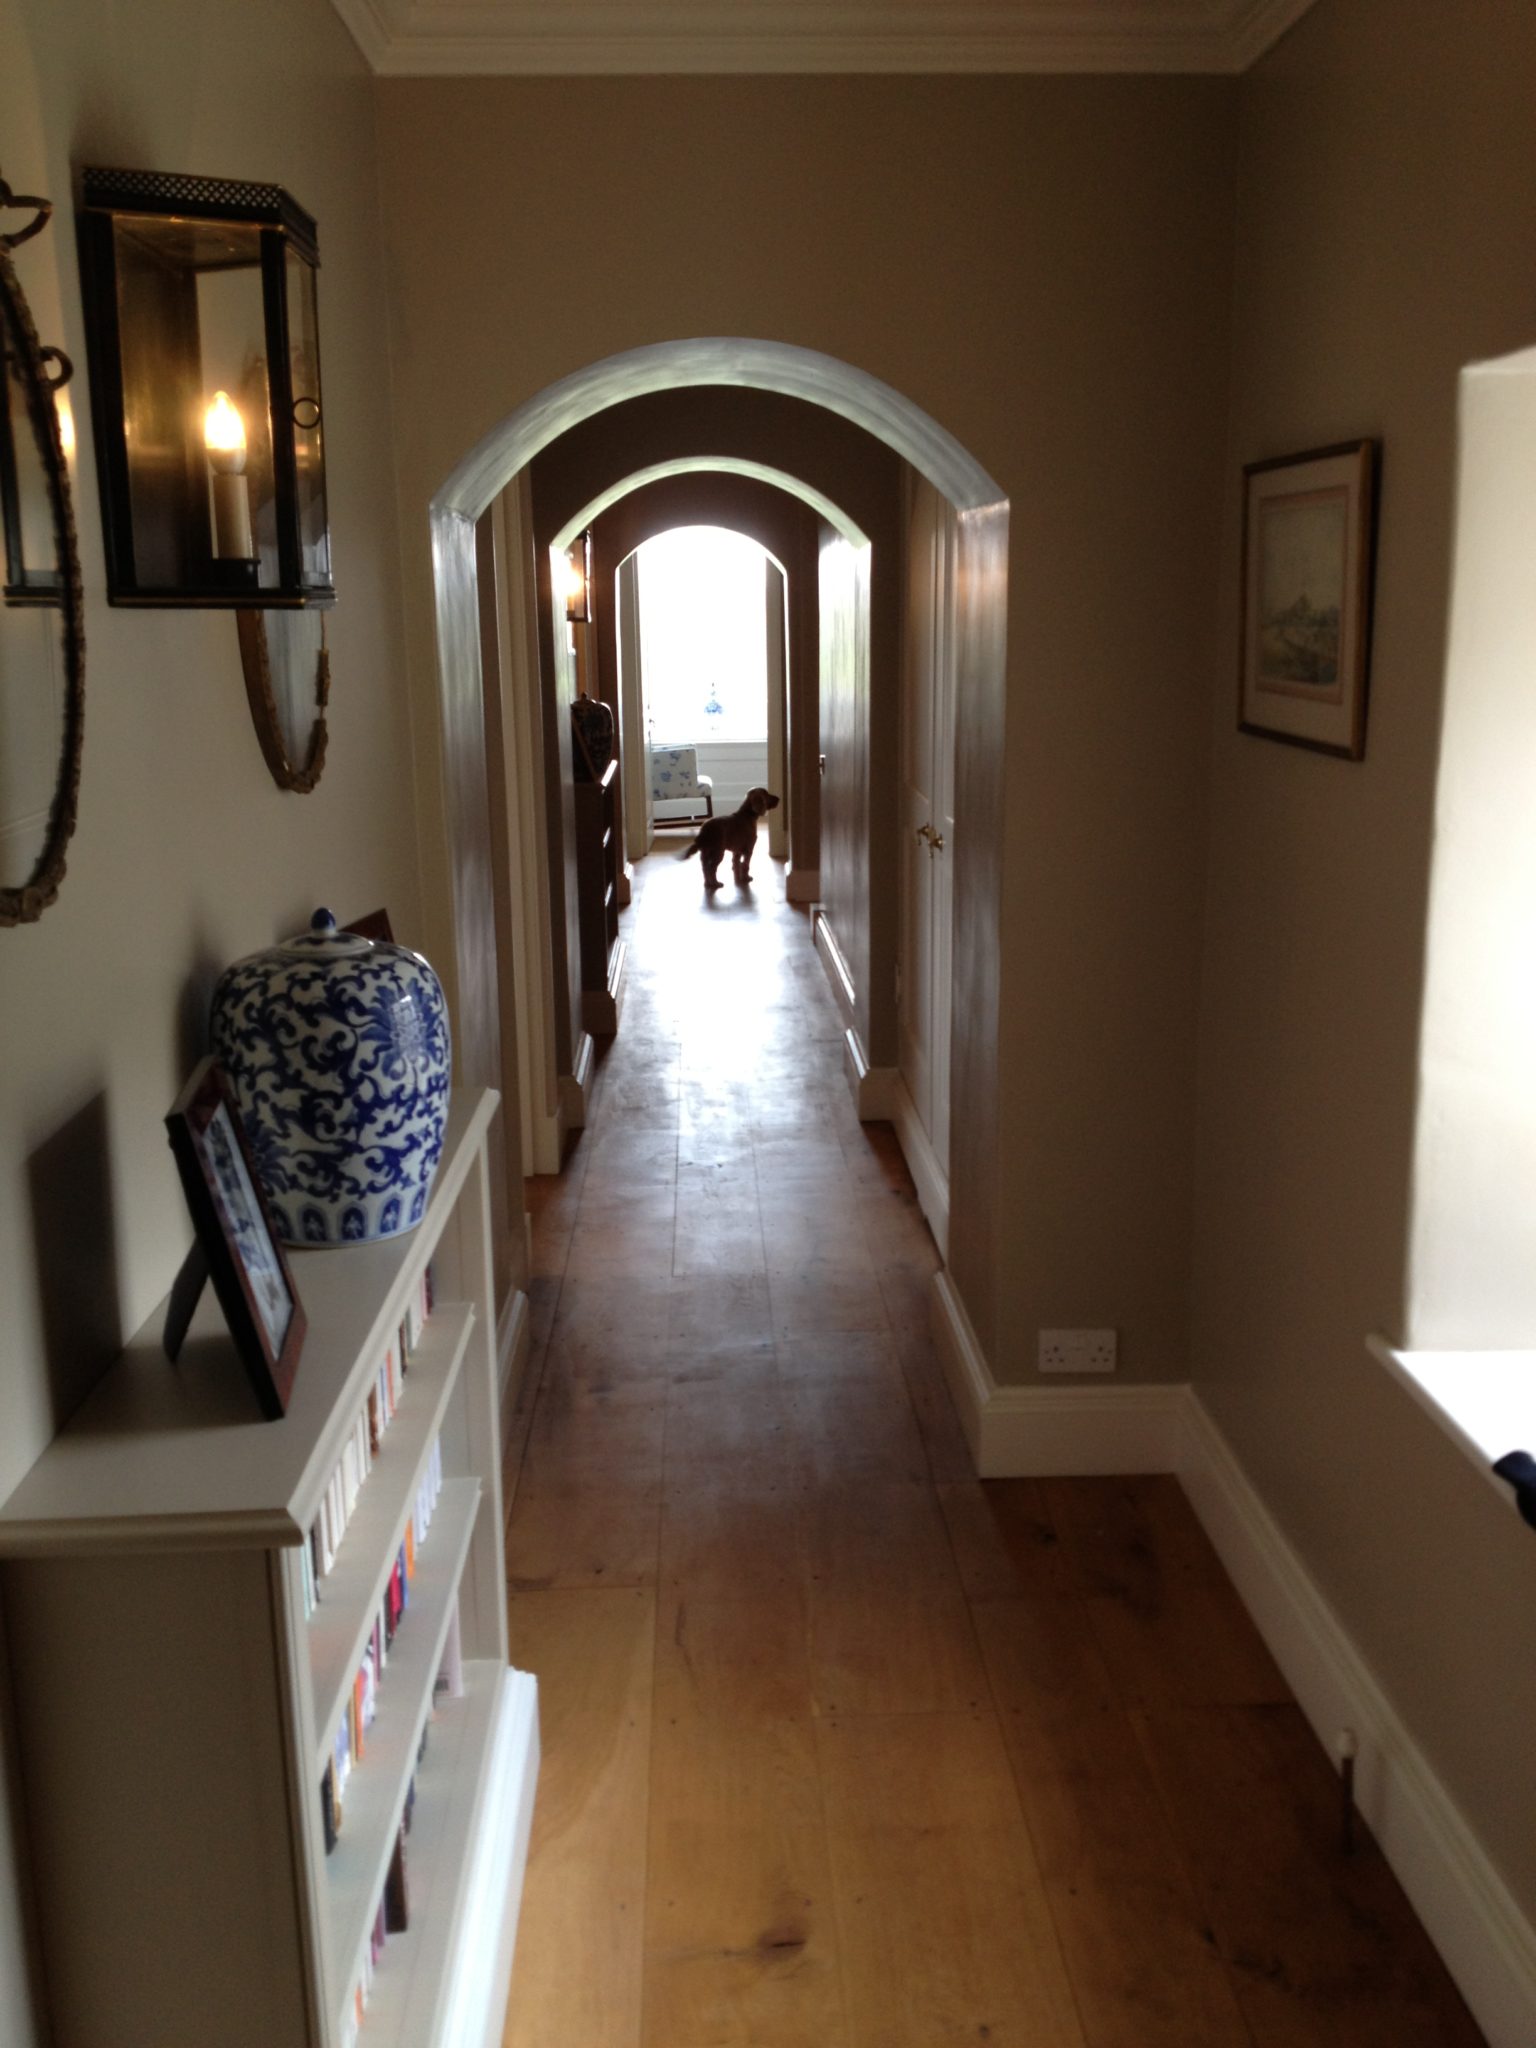 Upstairs corridor achieves a similar rhythm